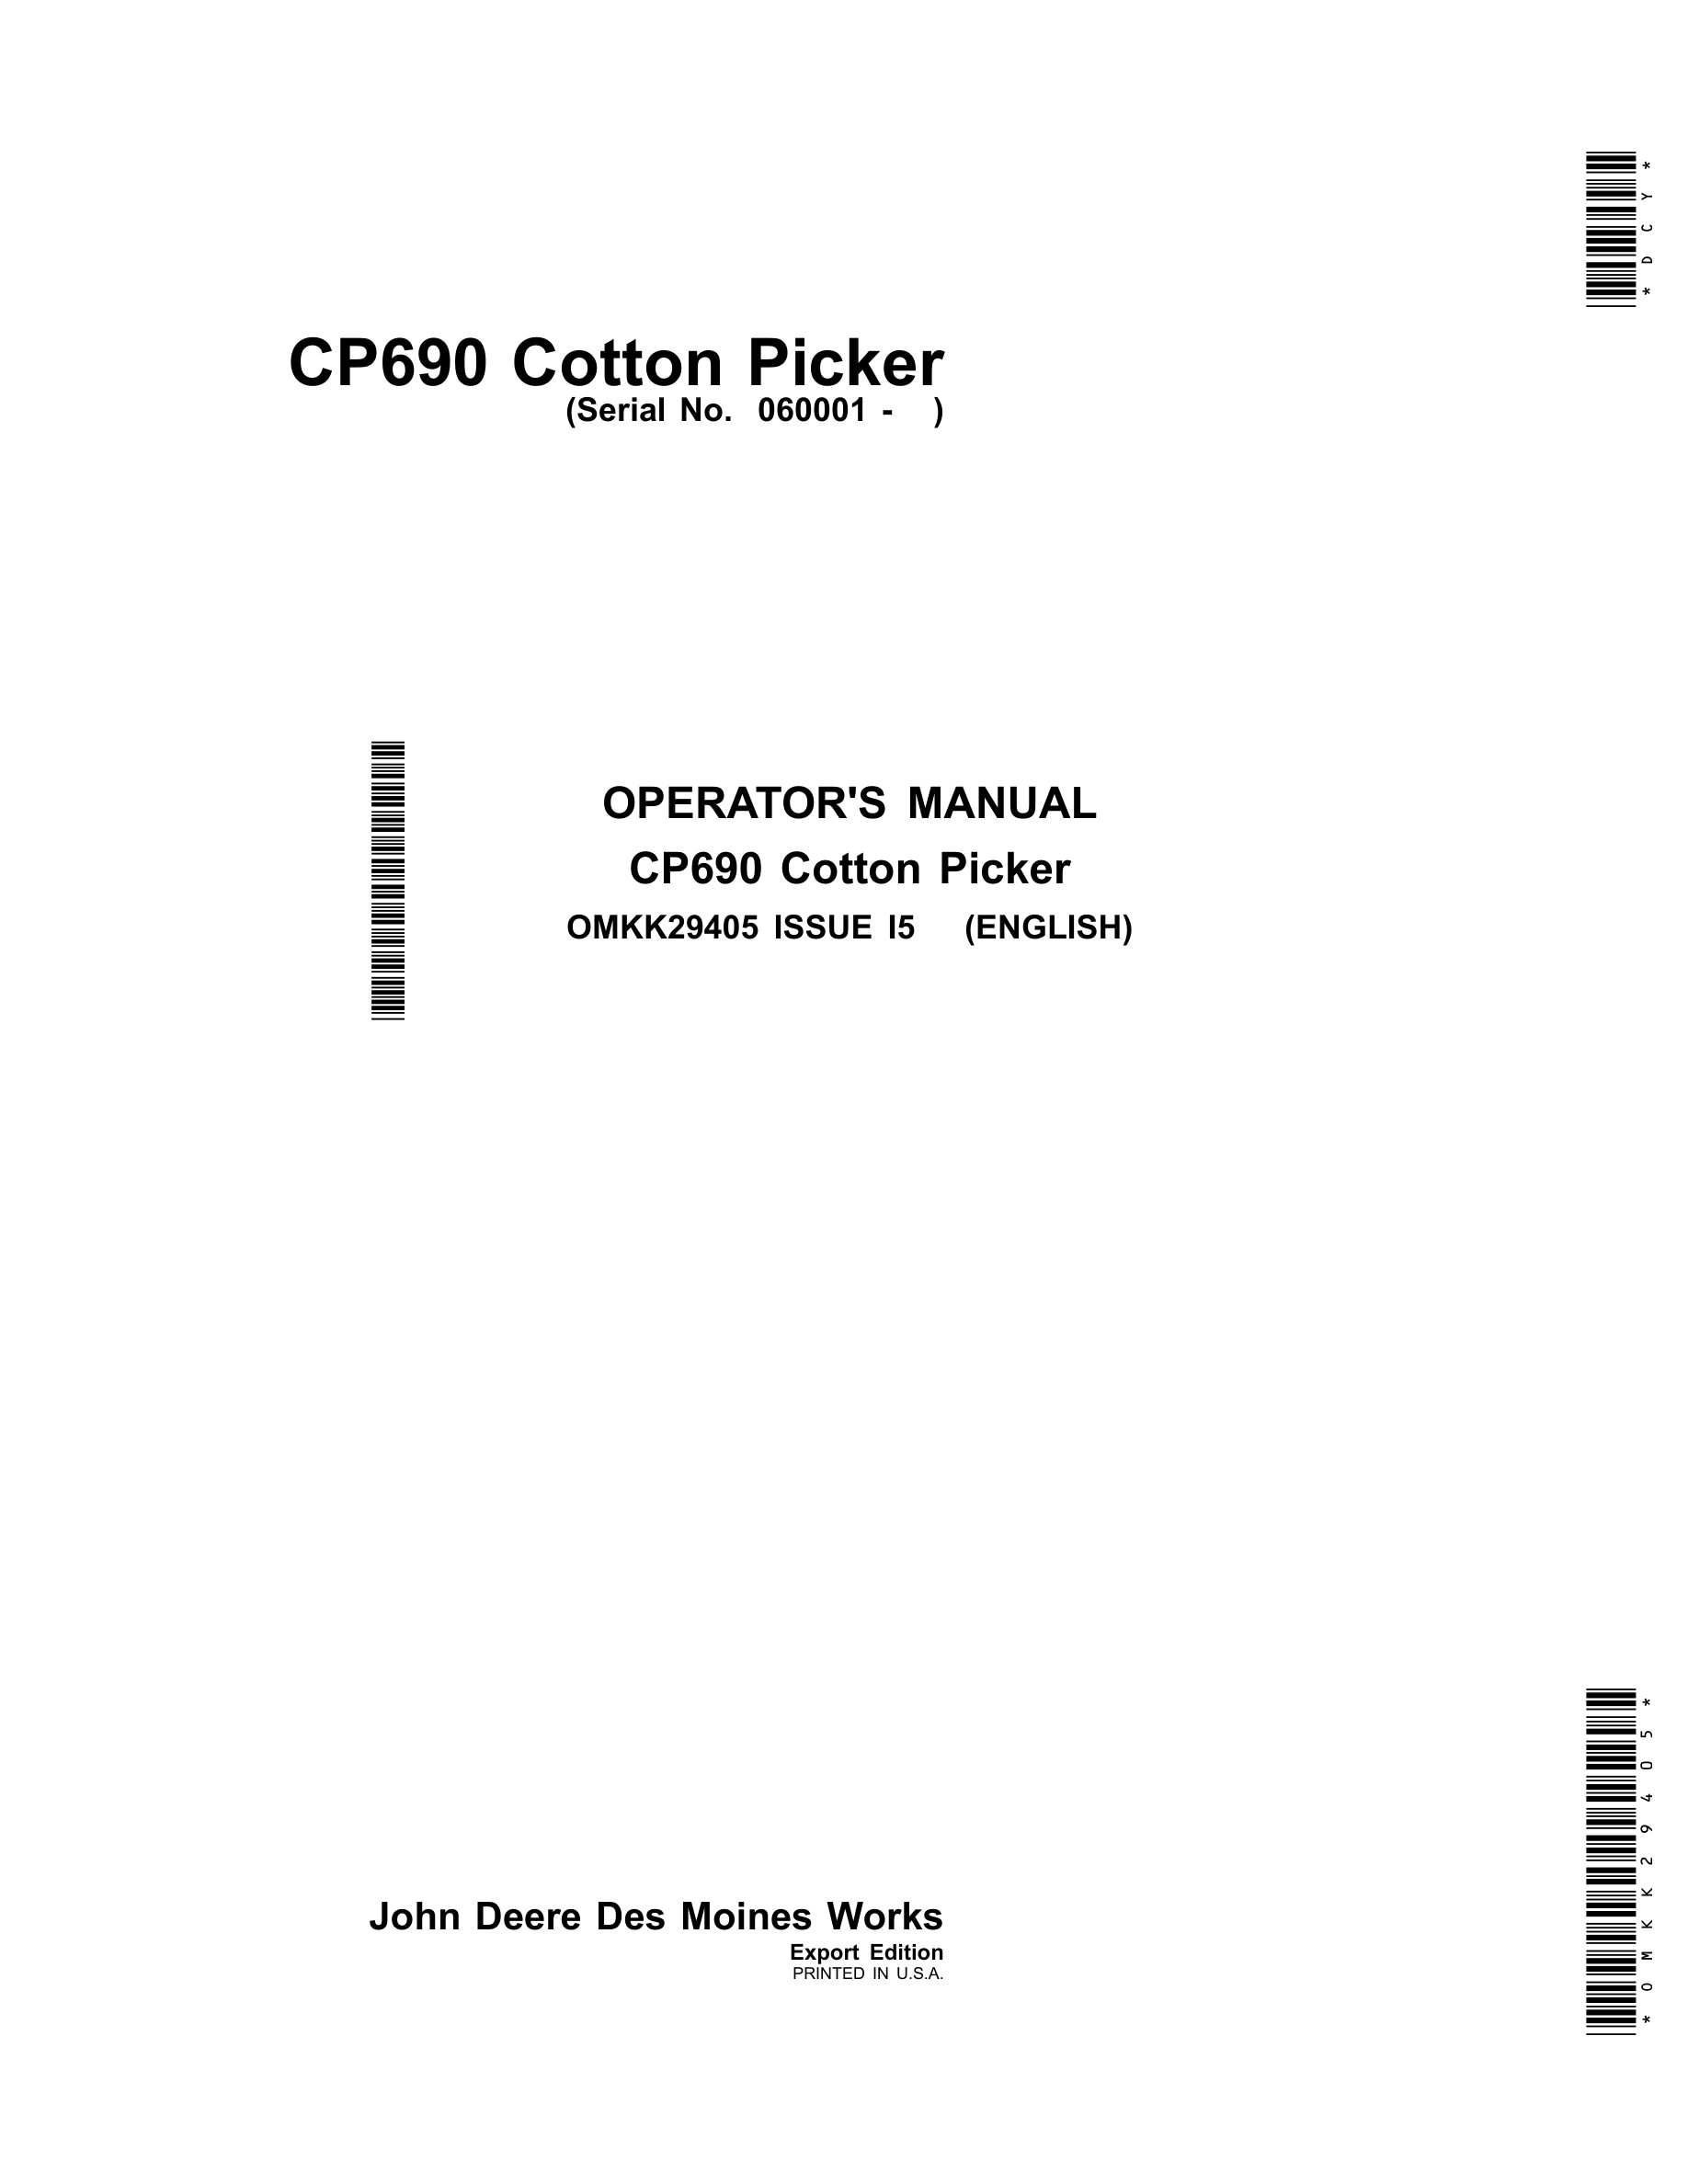 John Deere CP690 Cotton Picker Operator Manual OMKK29405-1